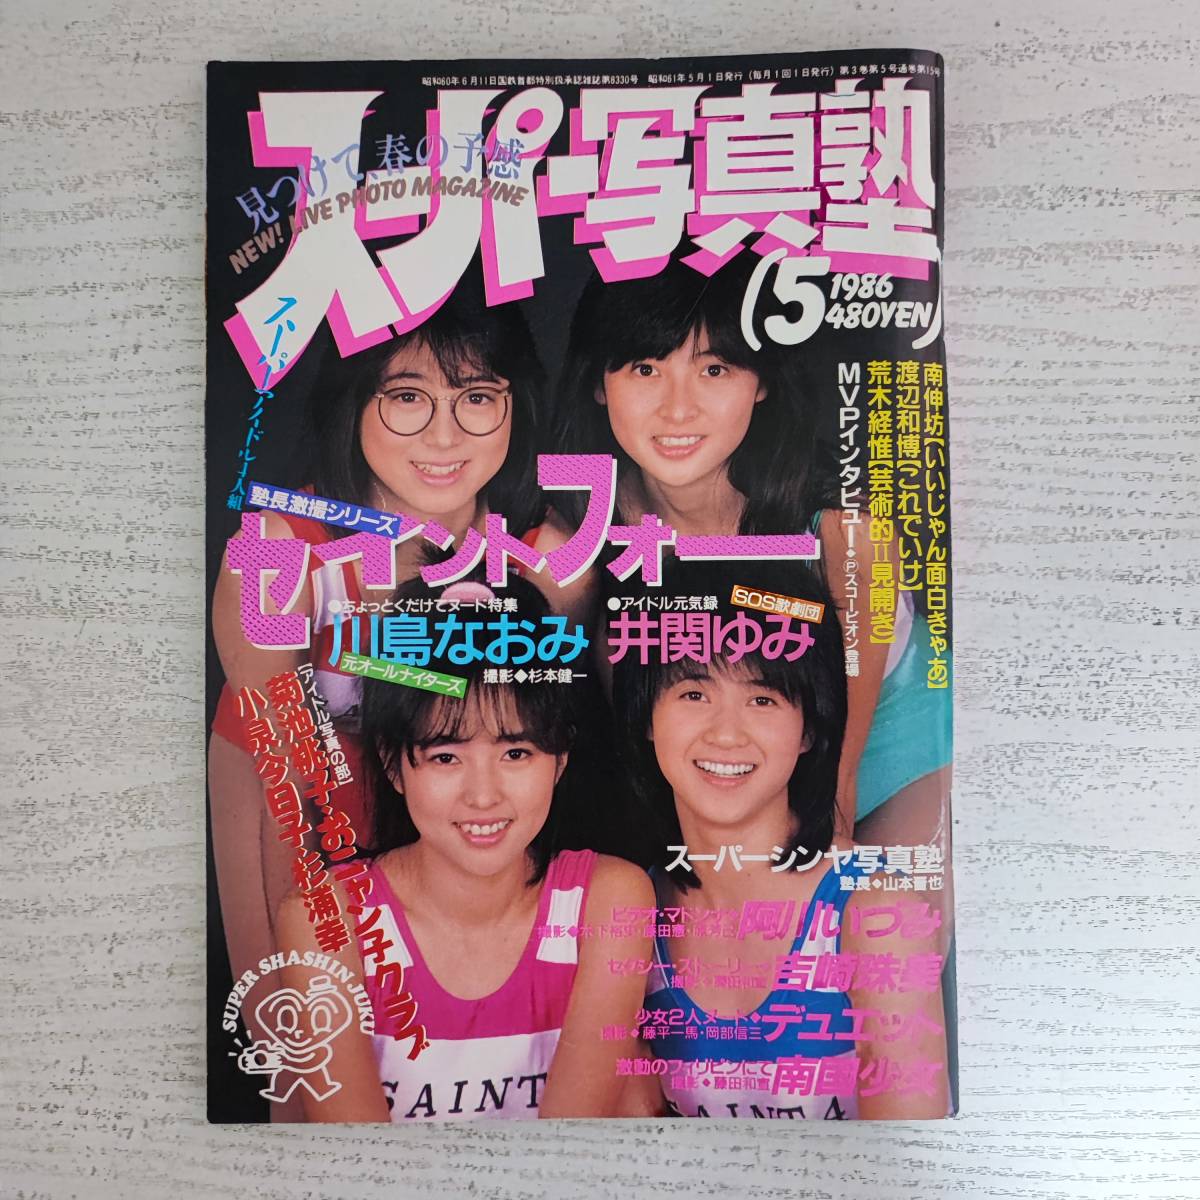 【雑誌】スーパー写真塾 1986年5月号 少年出版社